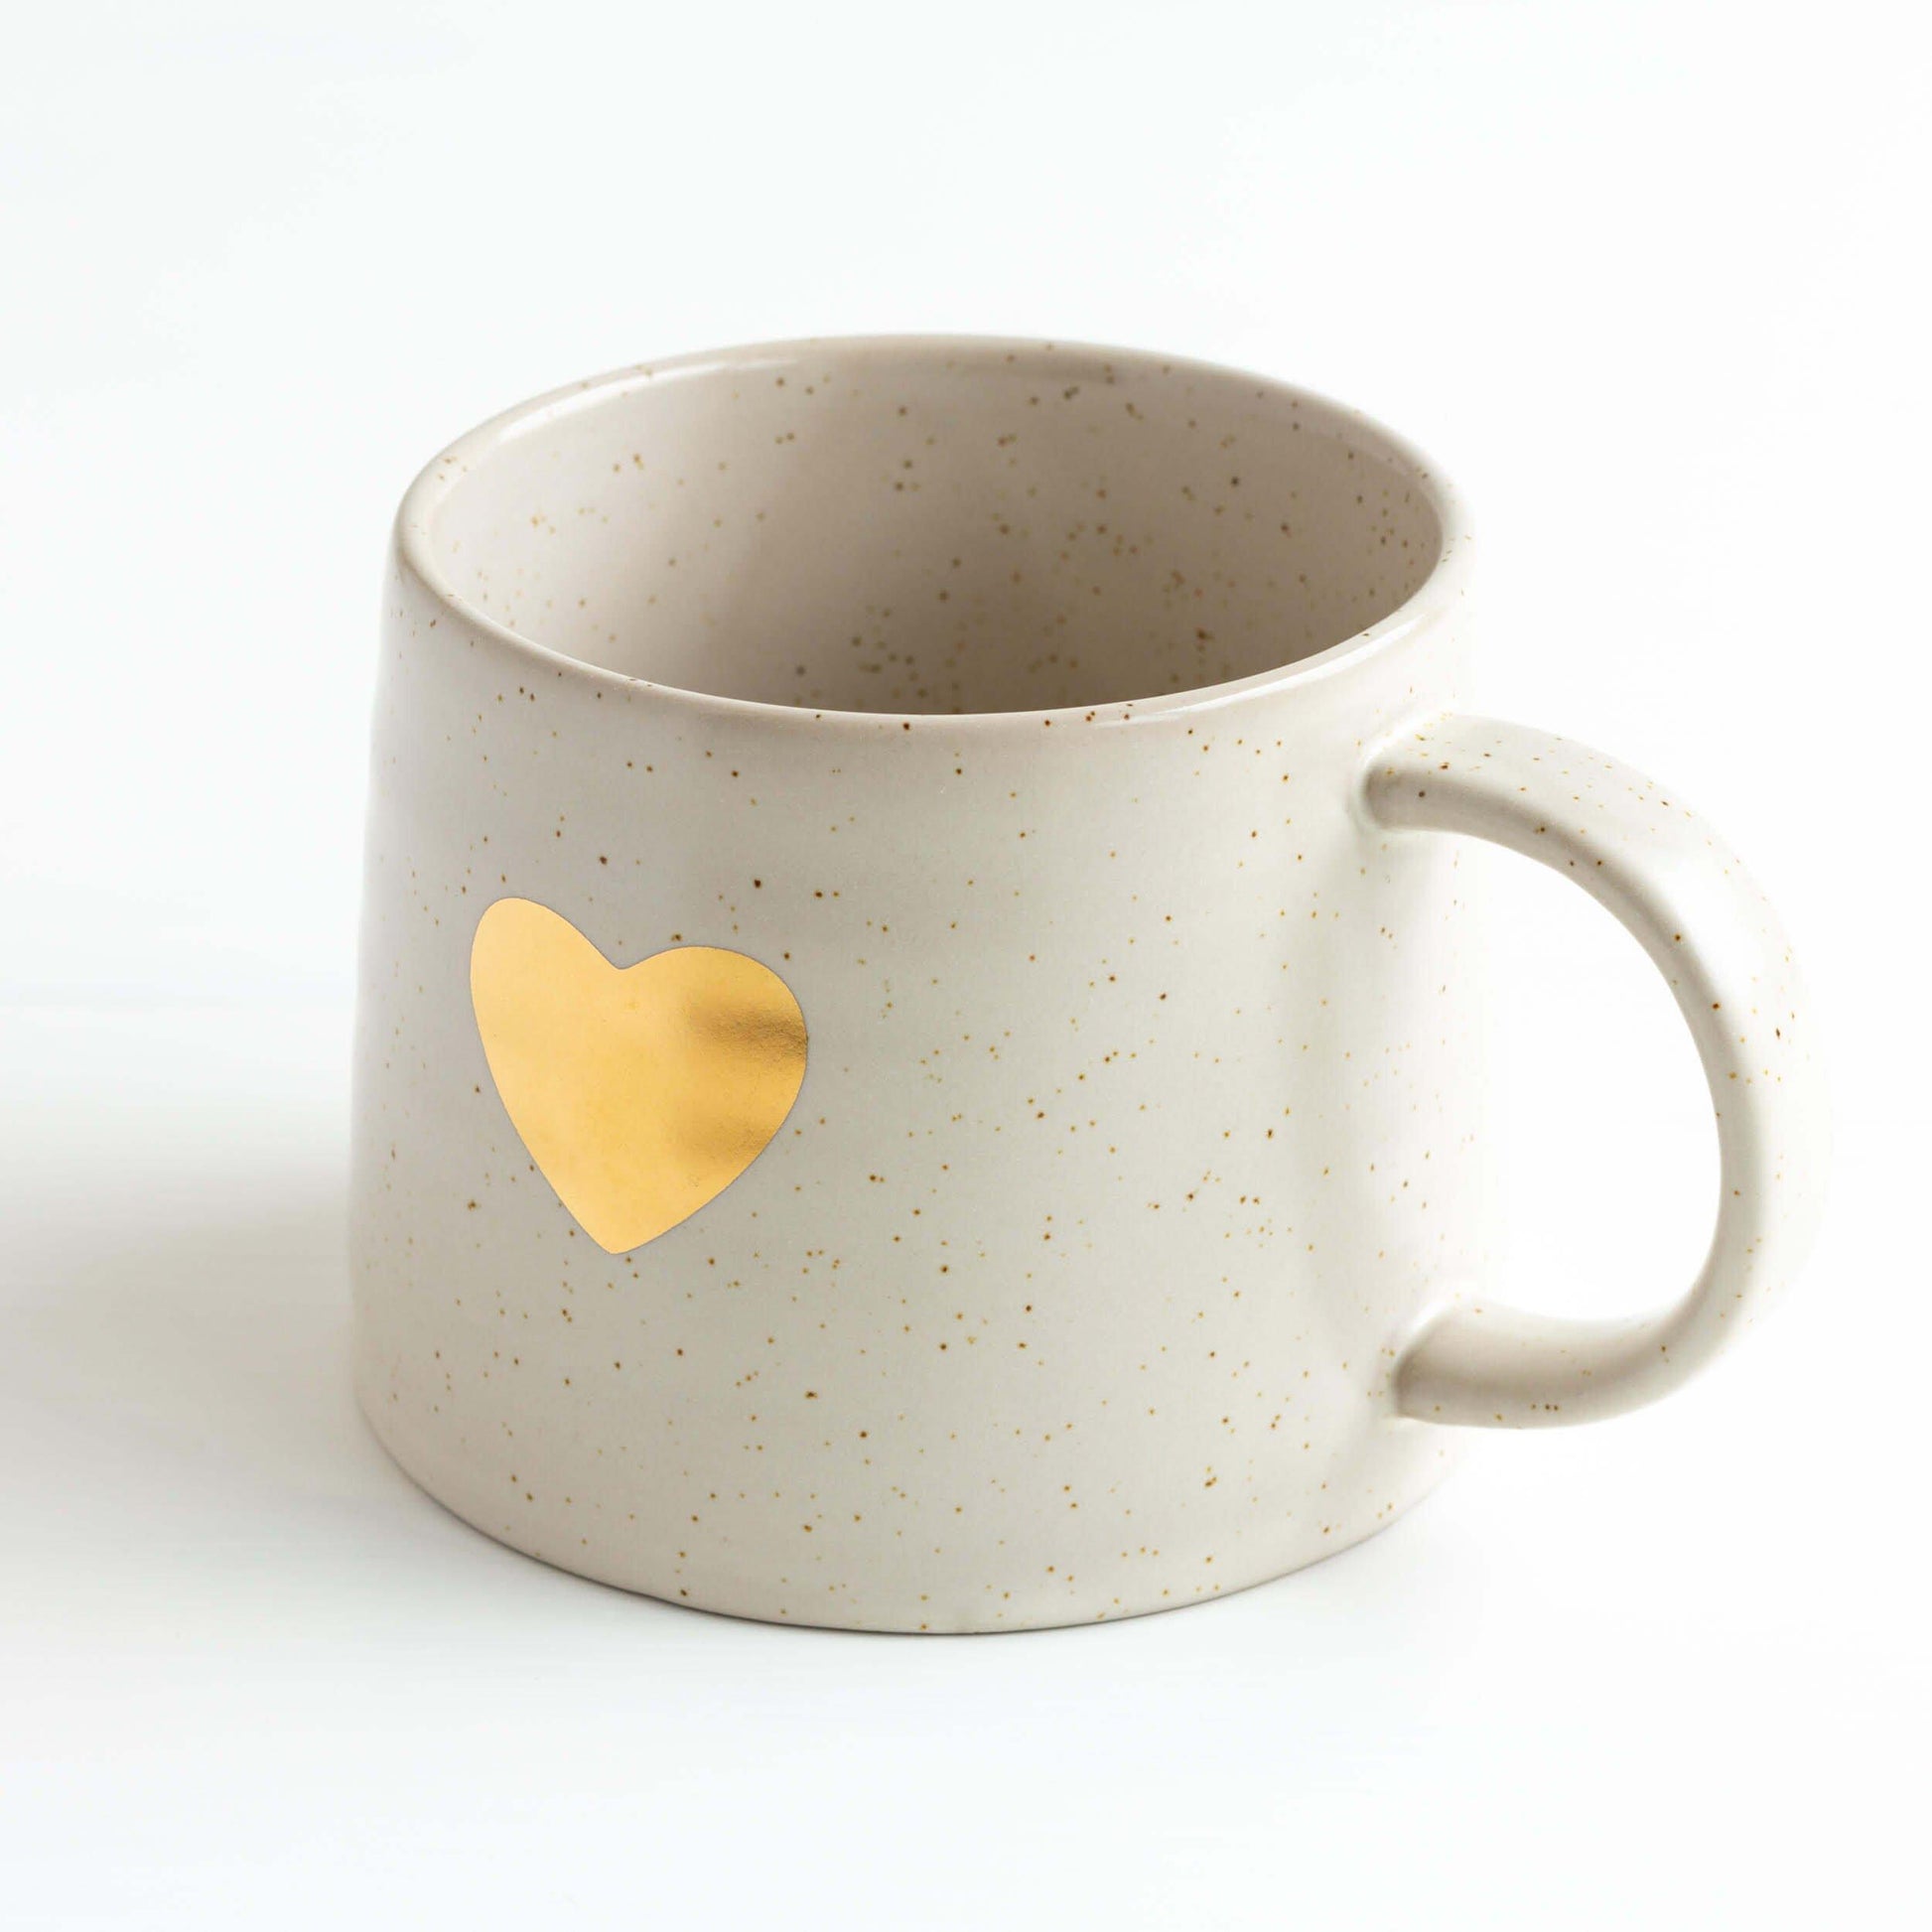 White mug with gold heart turned left